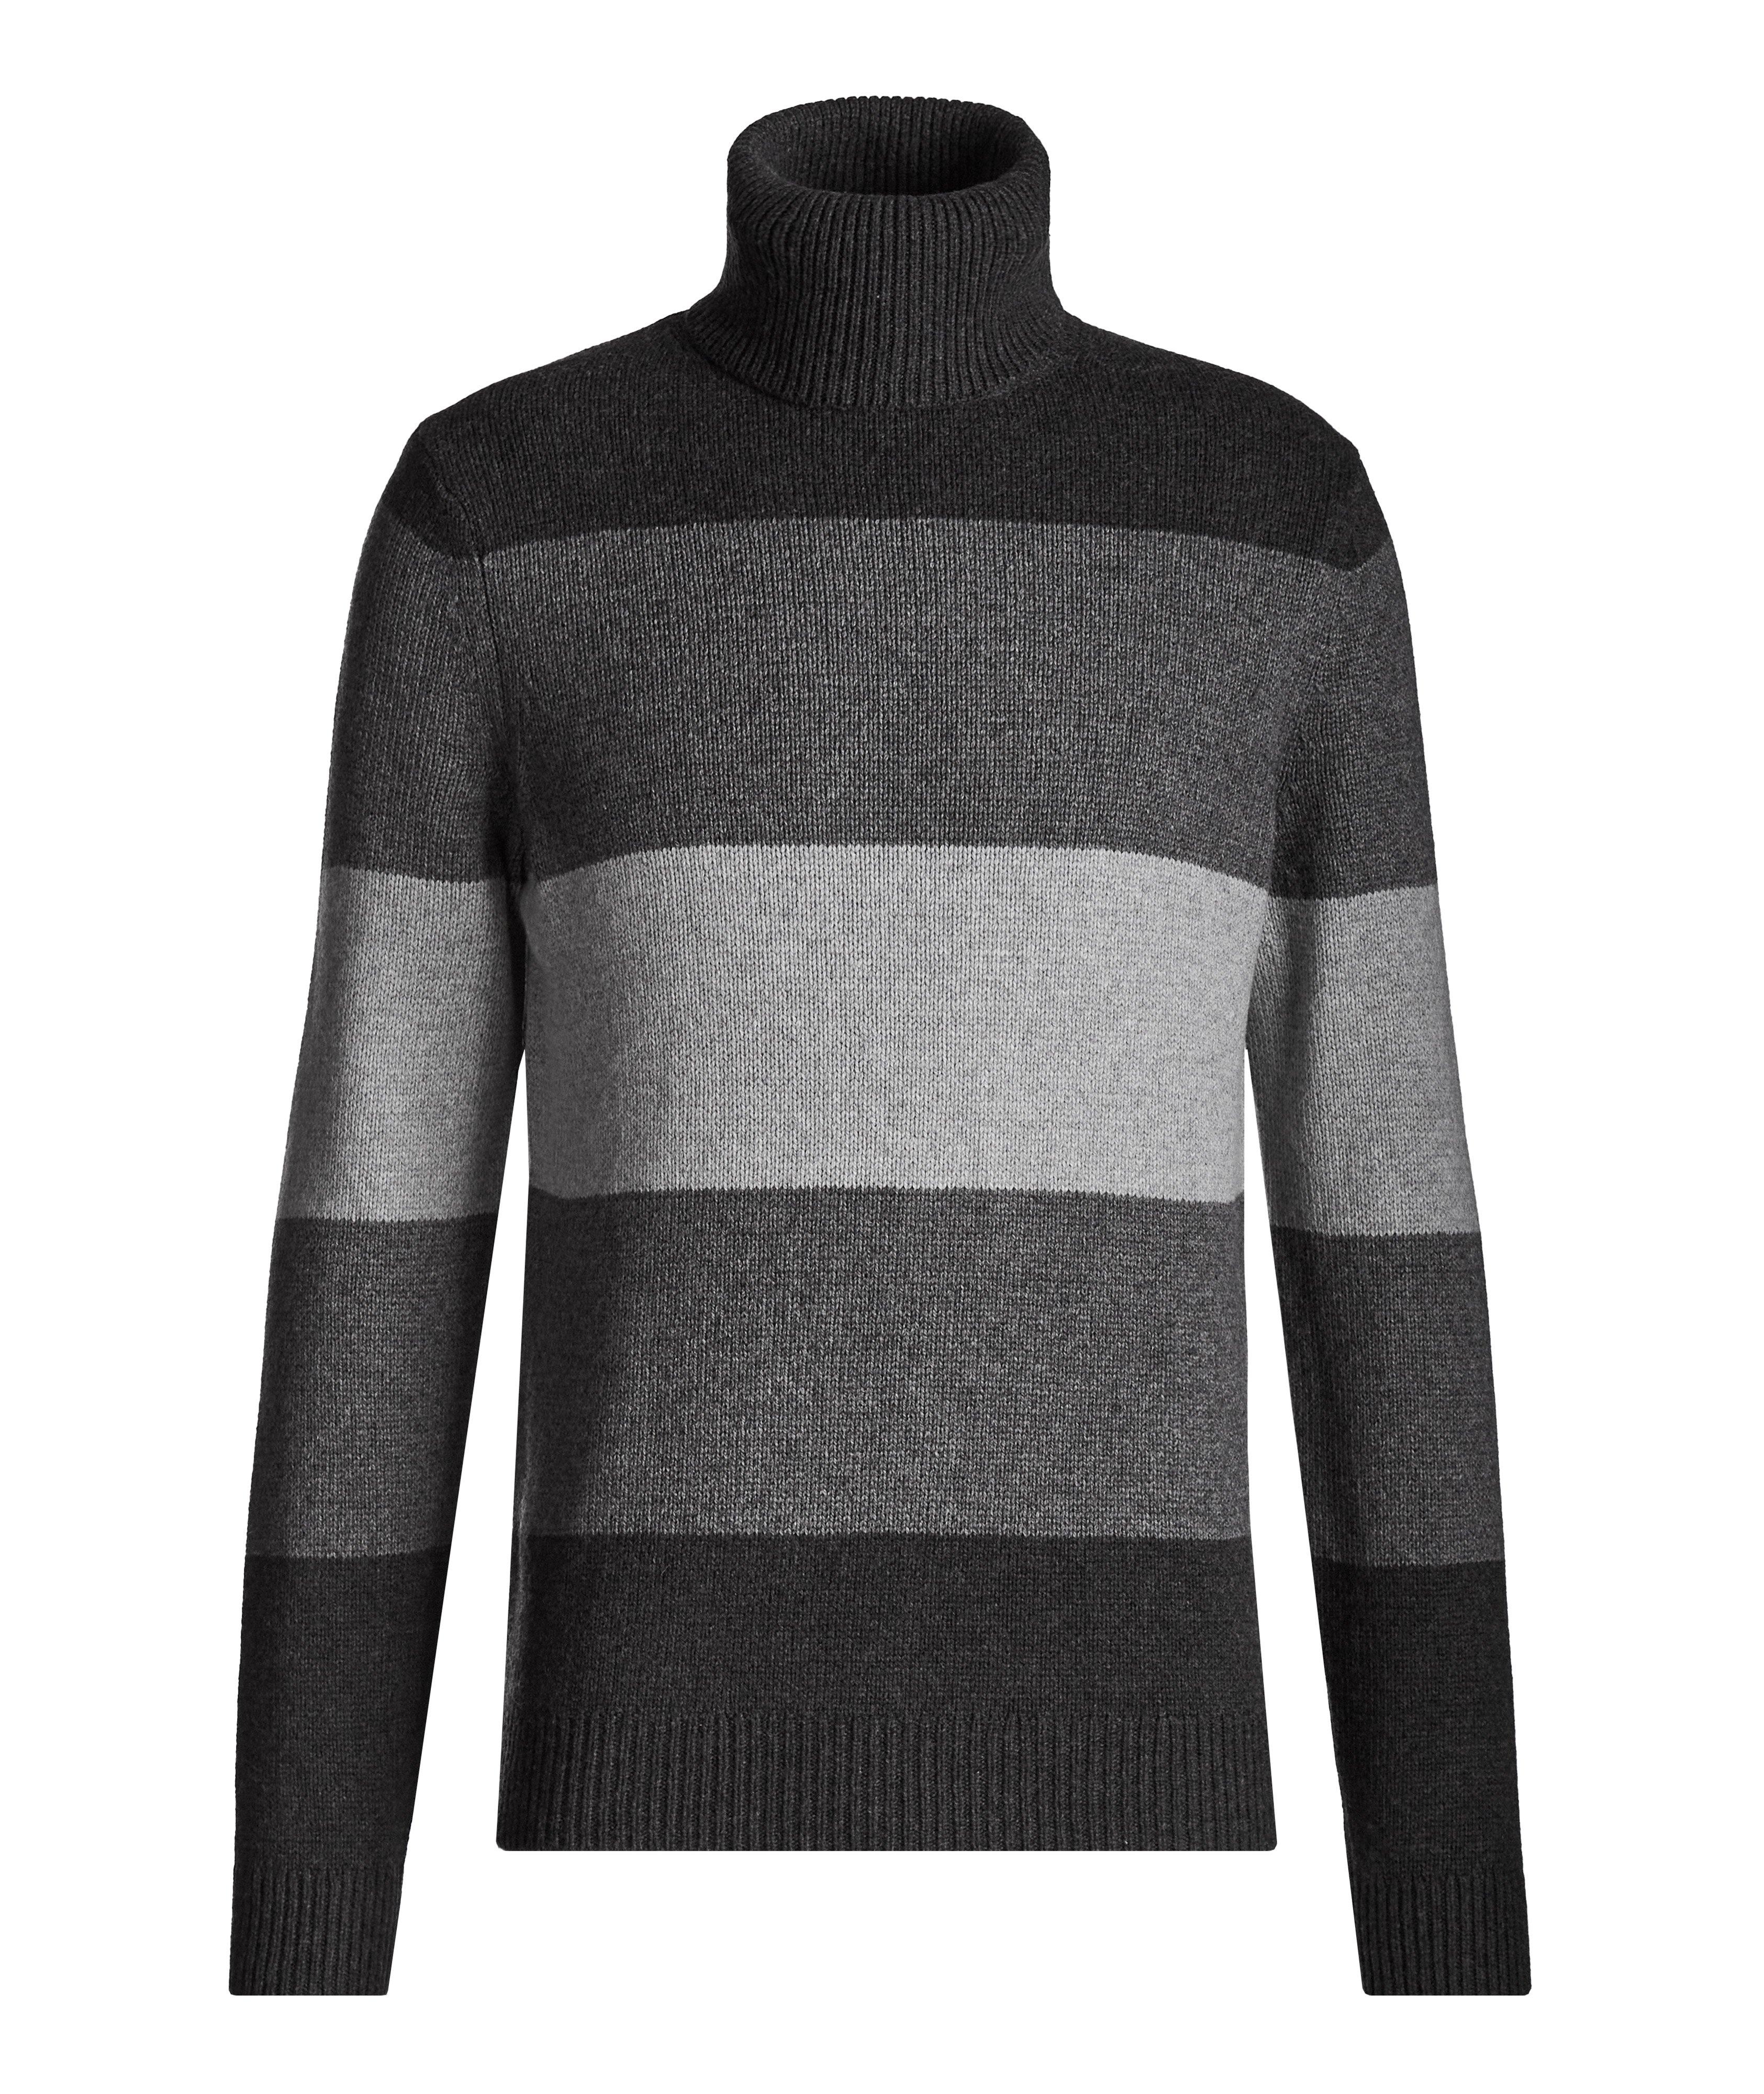 Michael Kors Merino Wool-Cotton Stripe Knit Turtleneck | Sweaters ...